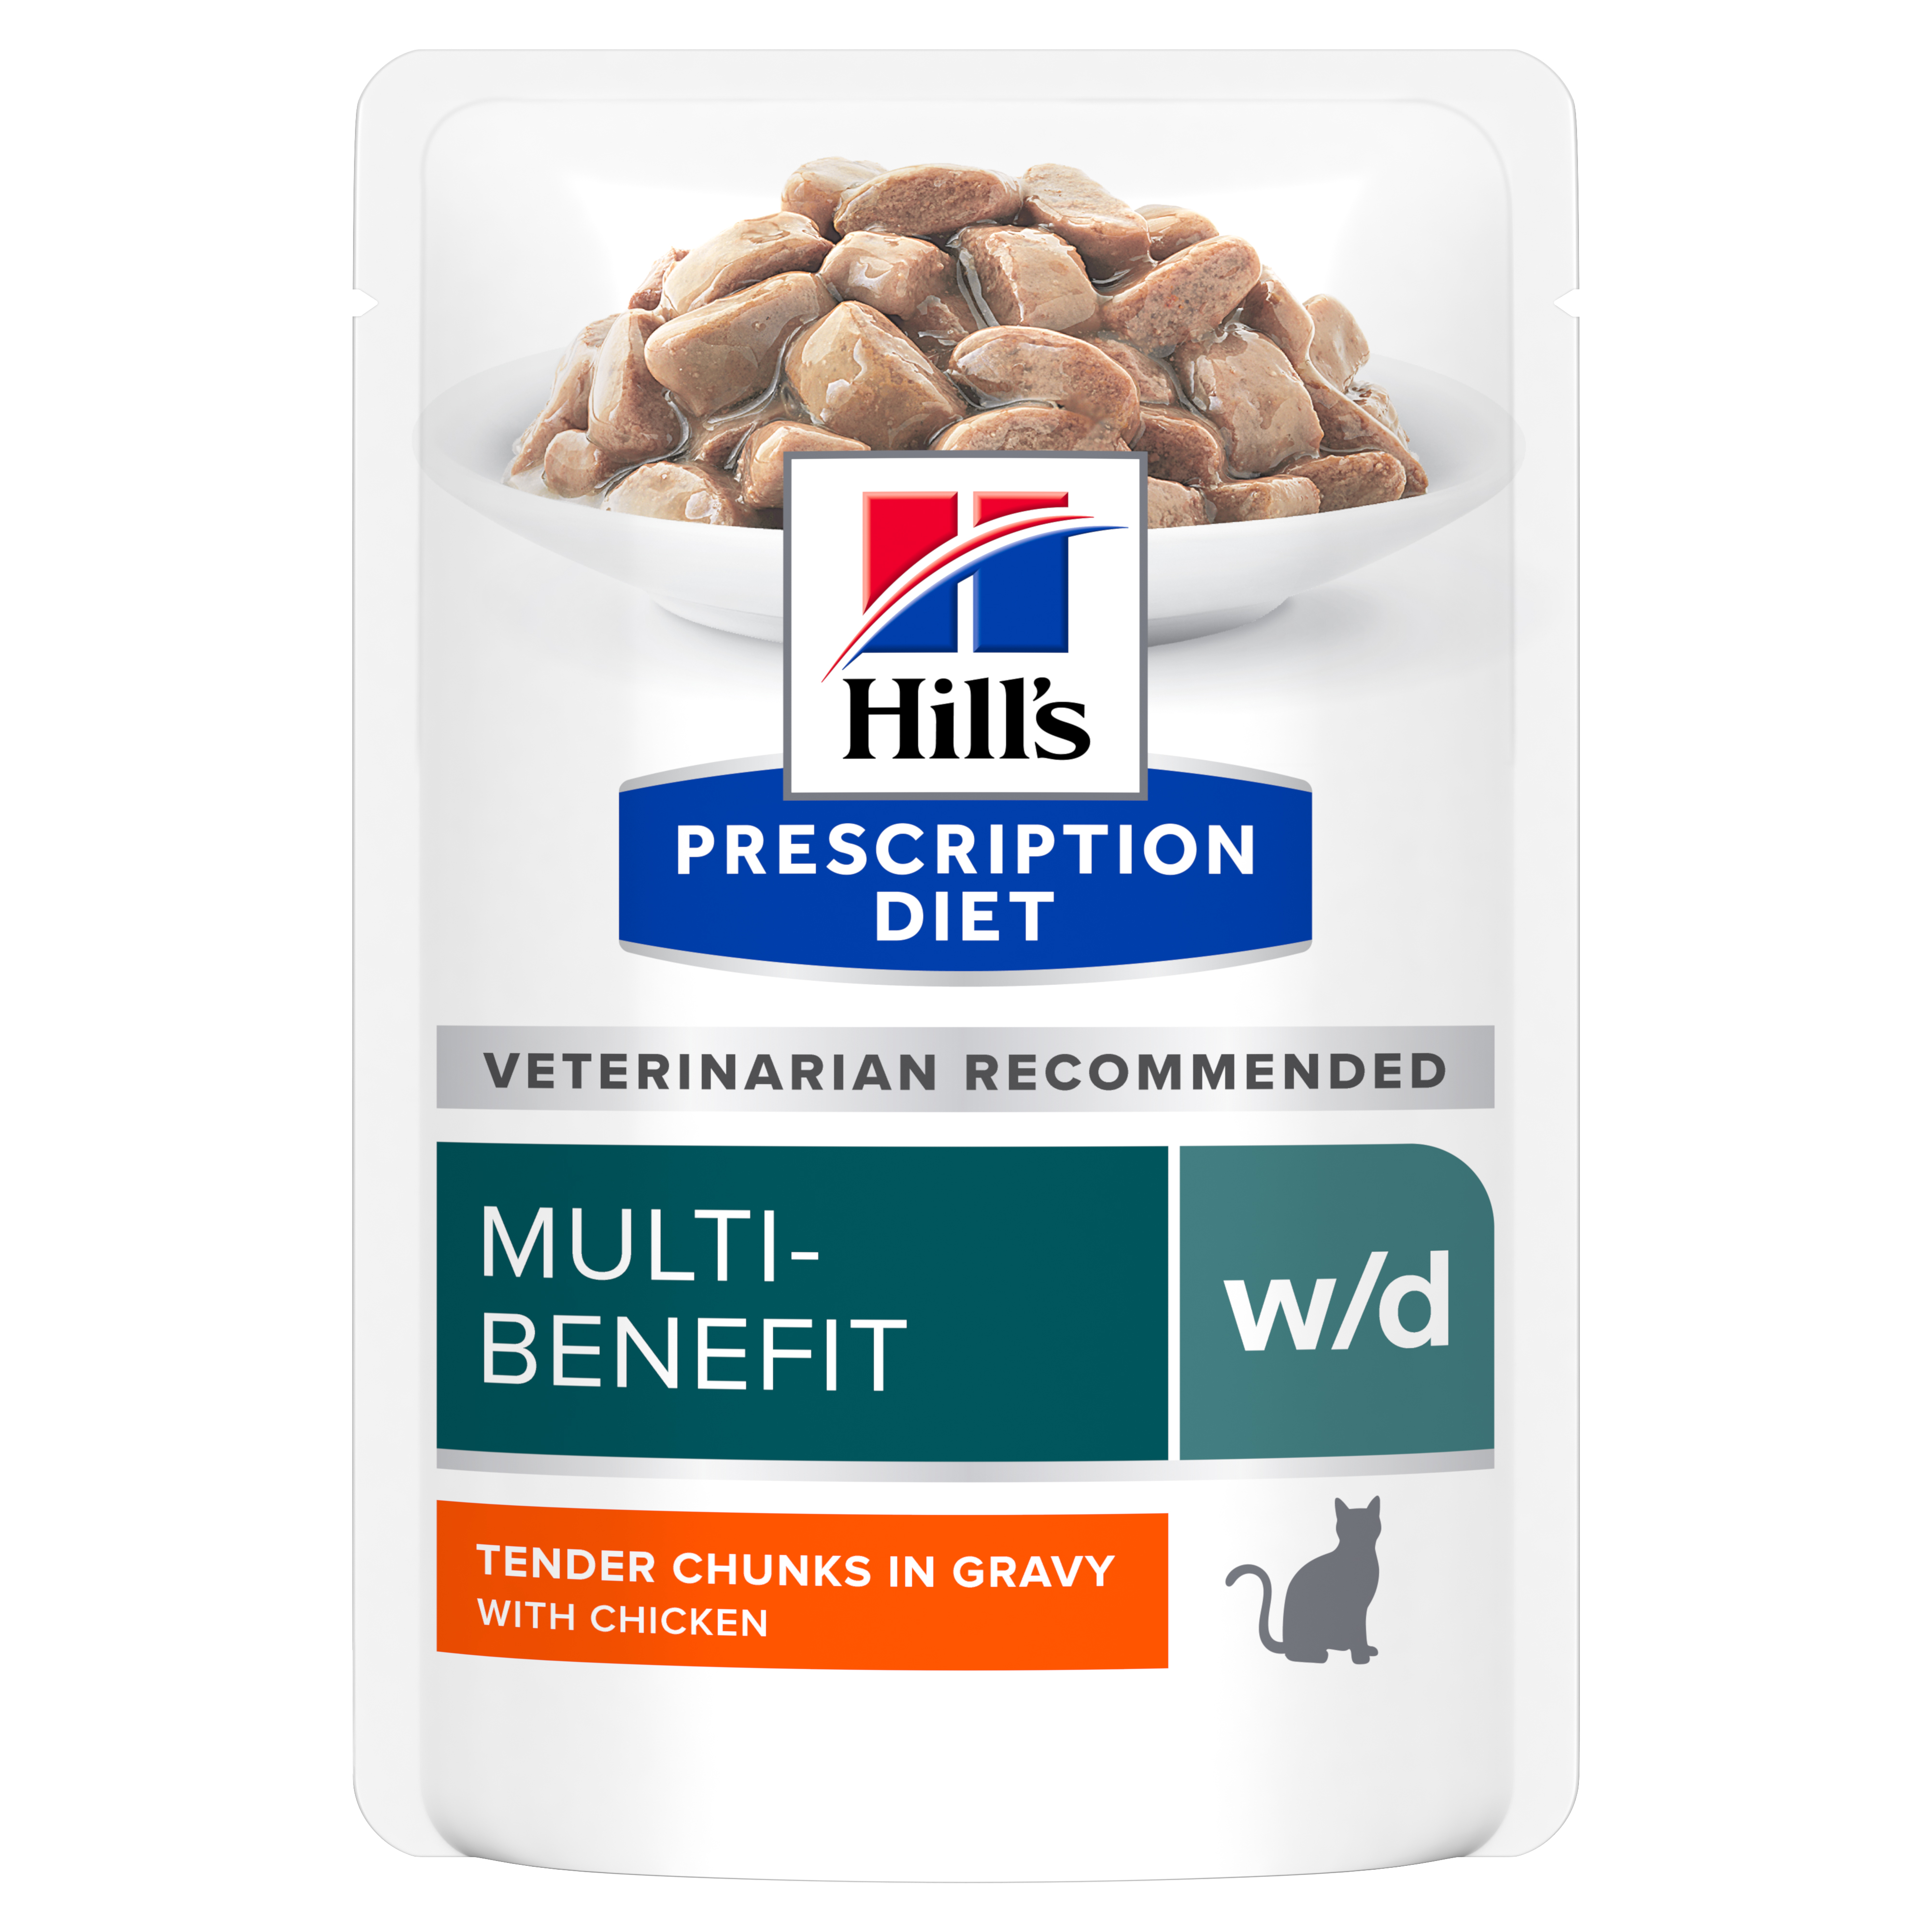 פאוצ' מזון w/d | Hill's Prescription Diet לחתול בוגר, 85 גר' (12 יח')